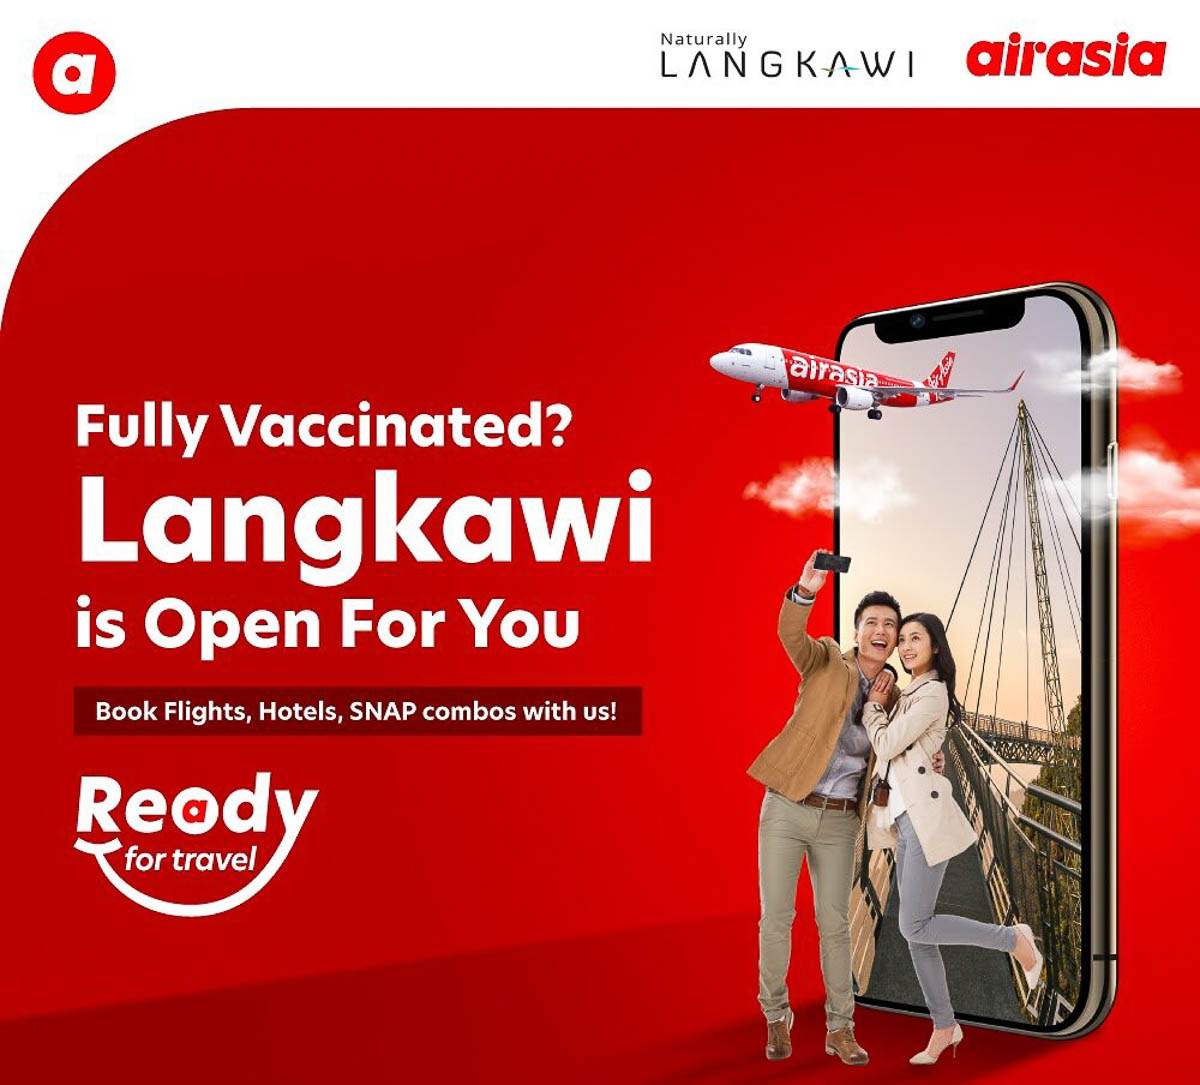 Langkawi offers